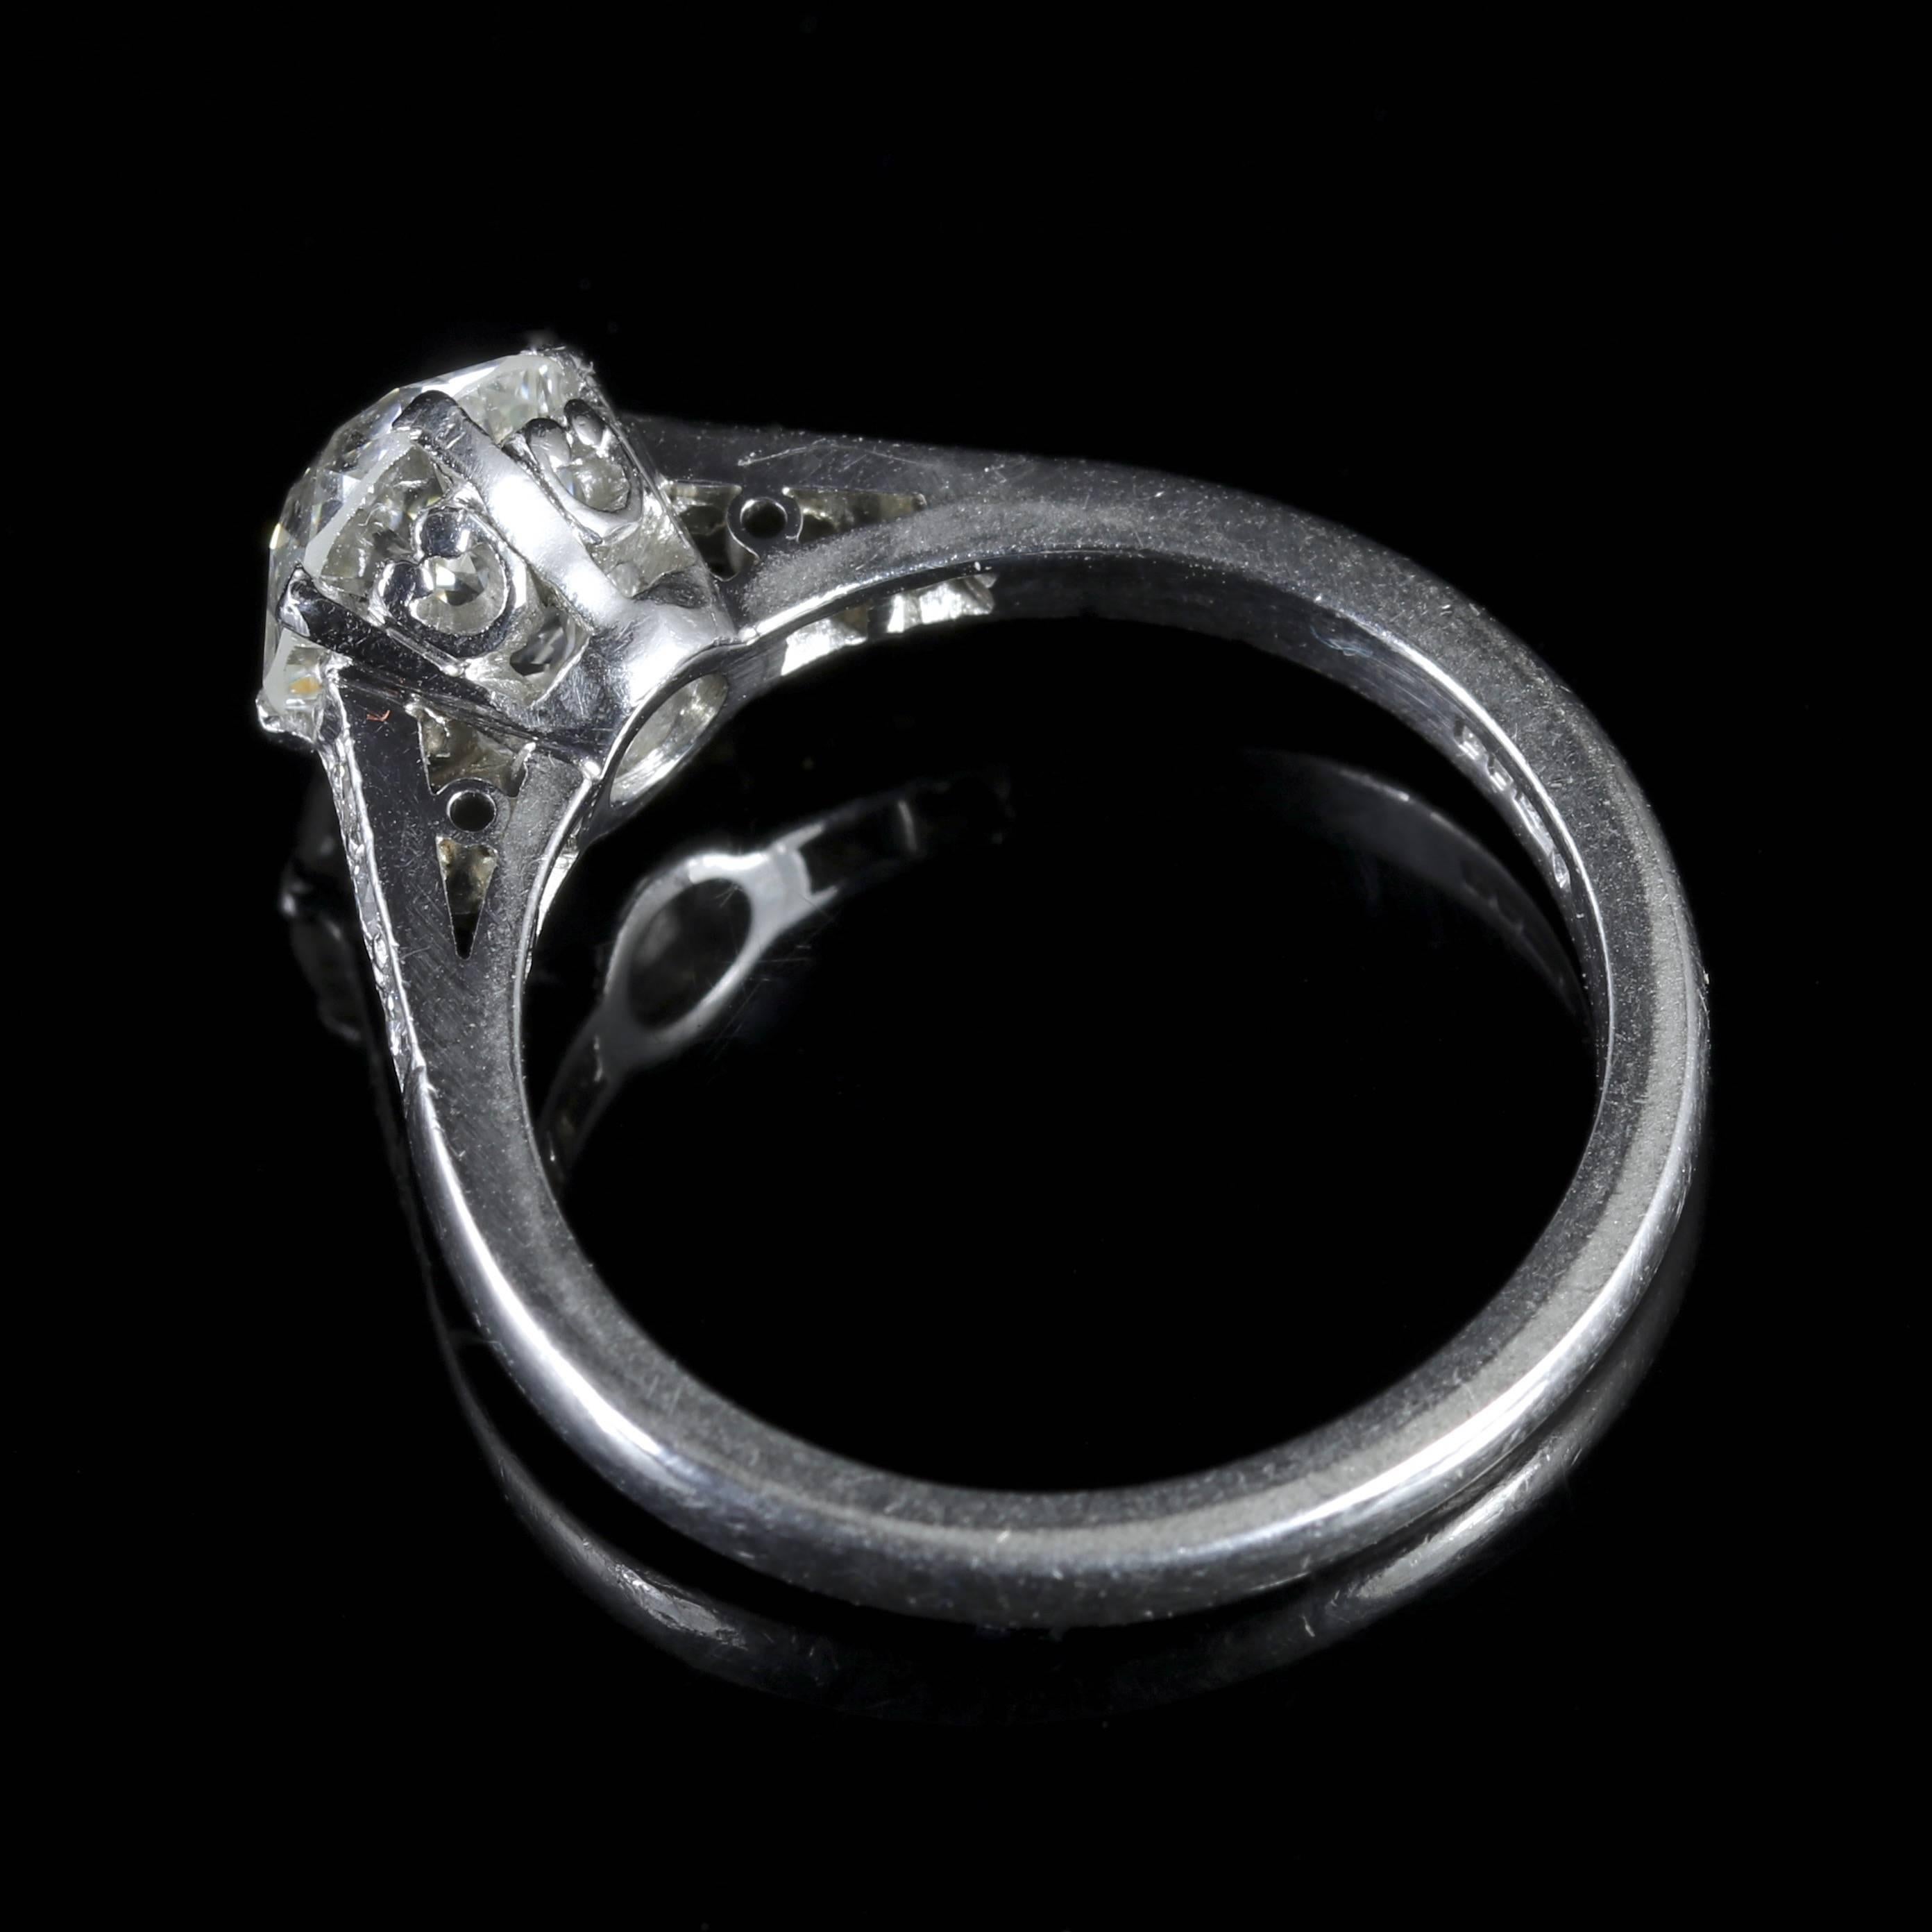 Antique Edwardian Platinum 1.58 Carat Solitaire Diamond Ring, circa 1915 For Sale 2